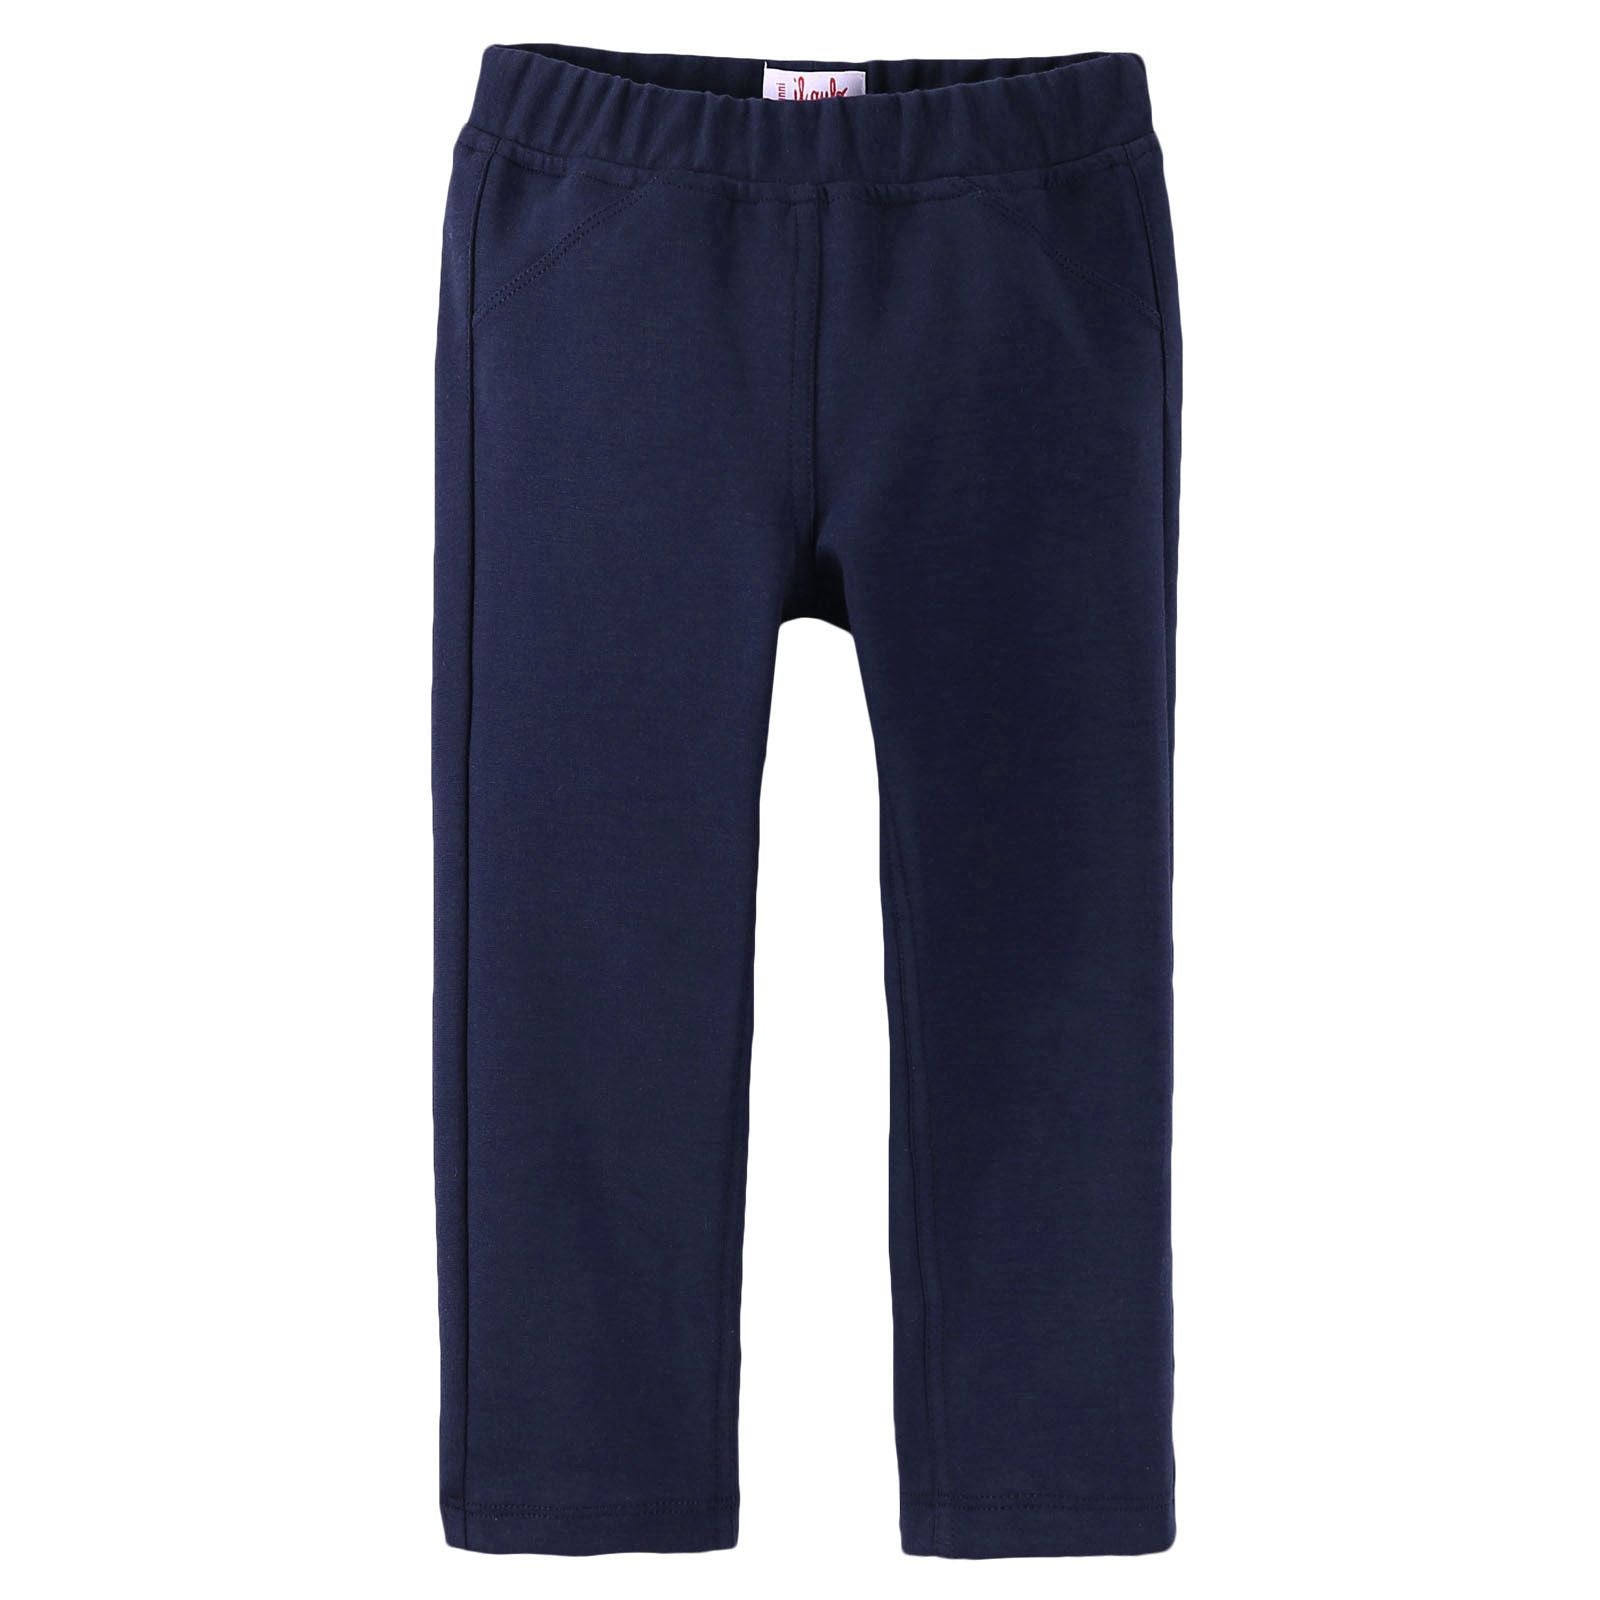 Girls Navy Blue Cotton Trousers With Elastic Waist - CÉMAROSE | Children's Fashion Store - 1